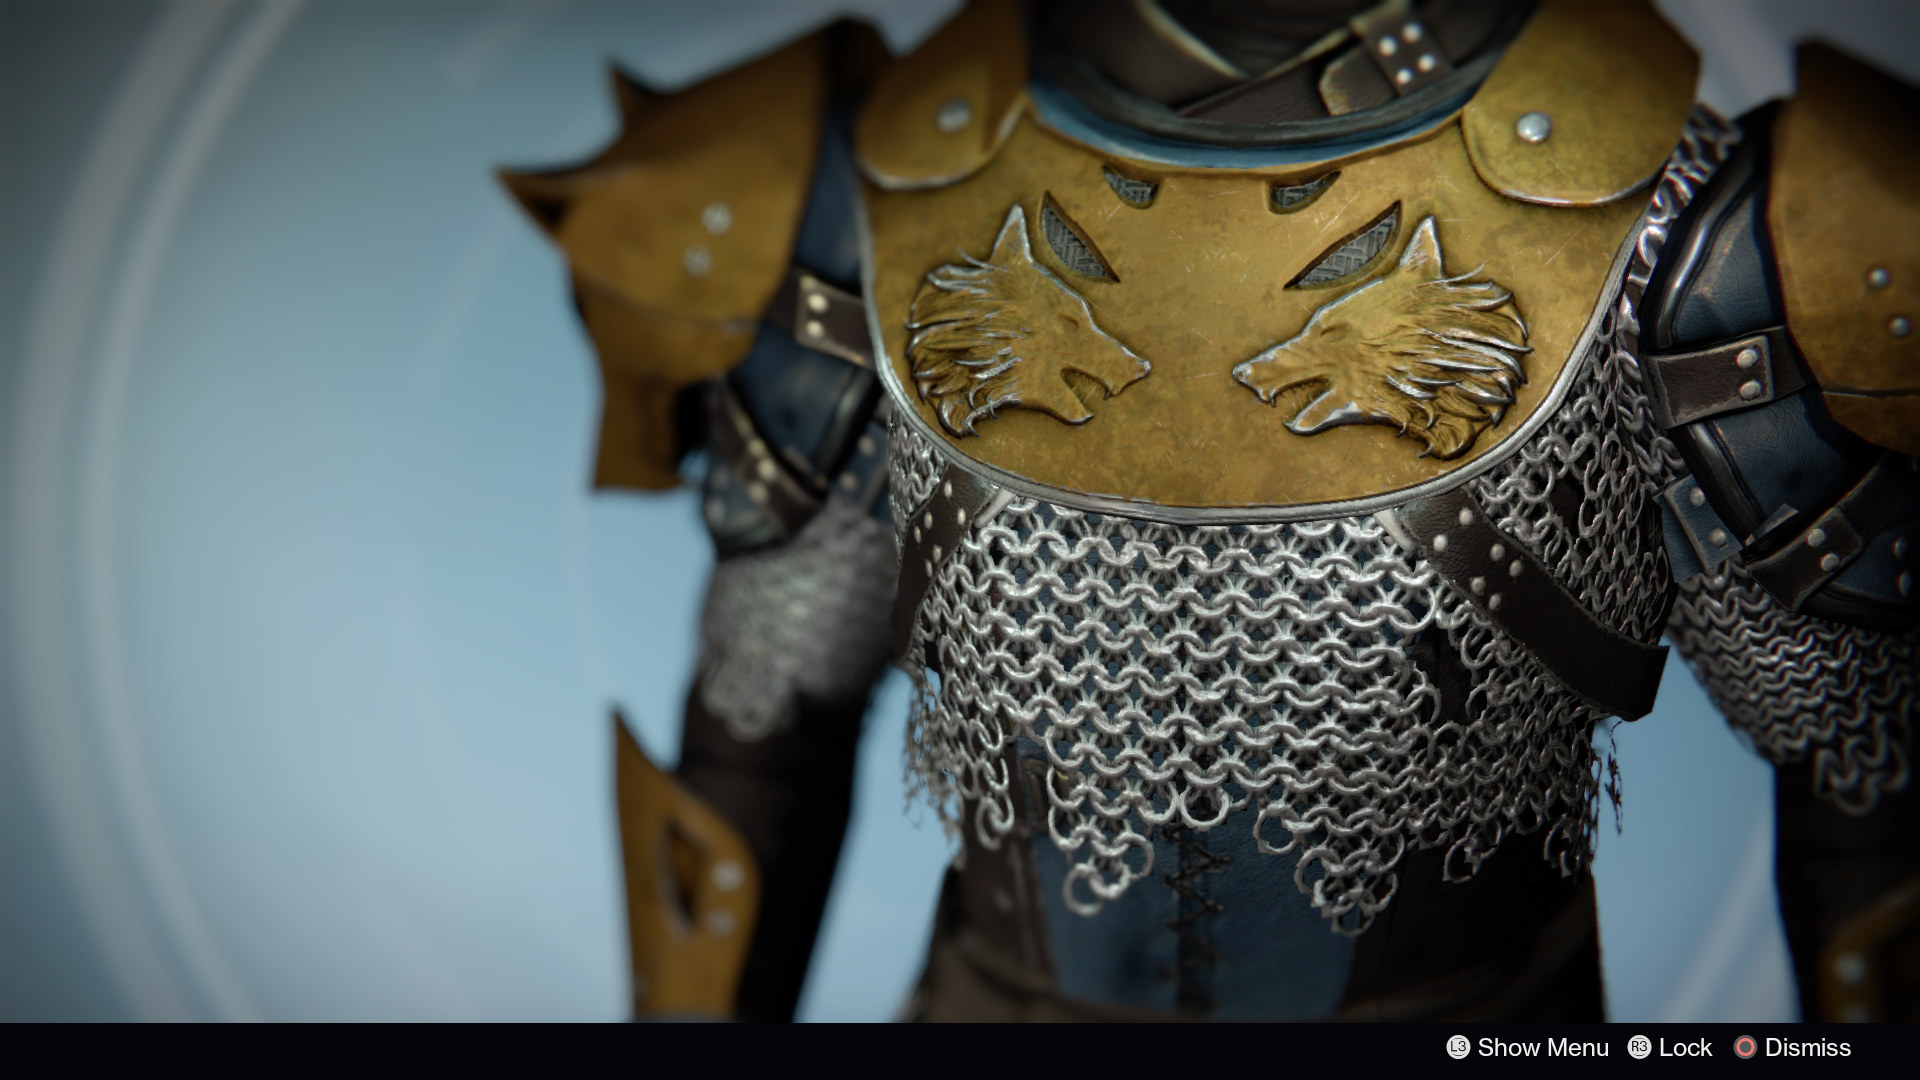 year 3 iron banner hunter armor